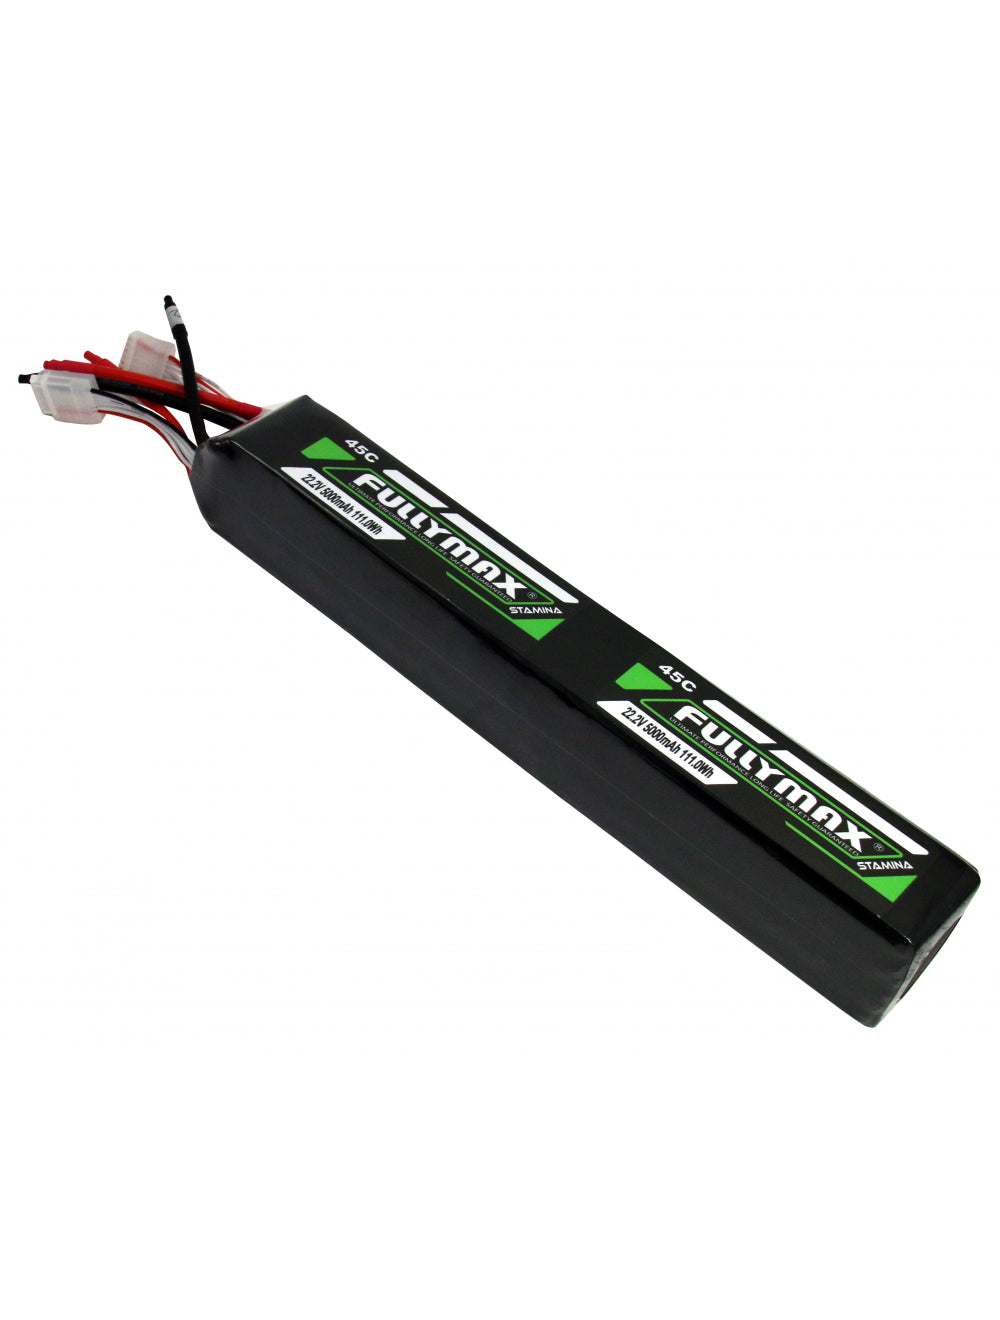 Overlander Fullymax 5000mAh 22.2V (x2) 12S 45C LiPo Battery - XT90 Anti Spark Connector 3449